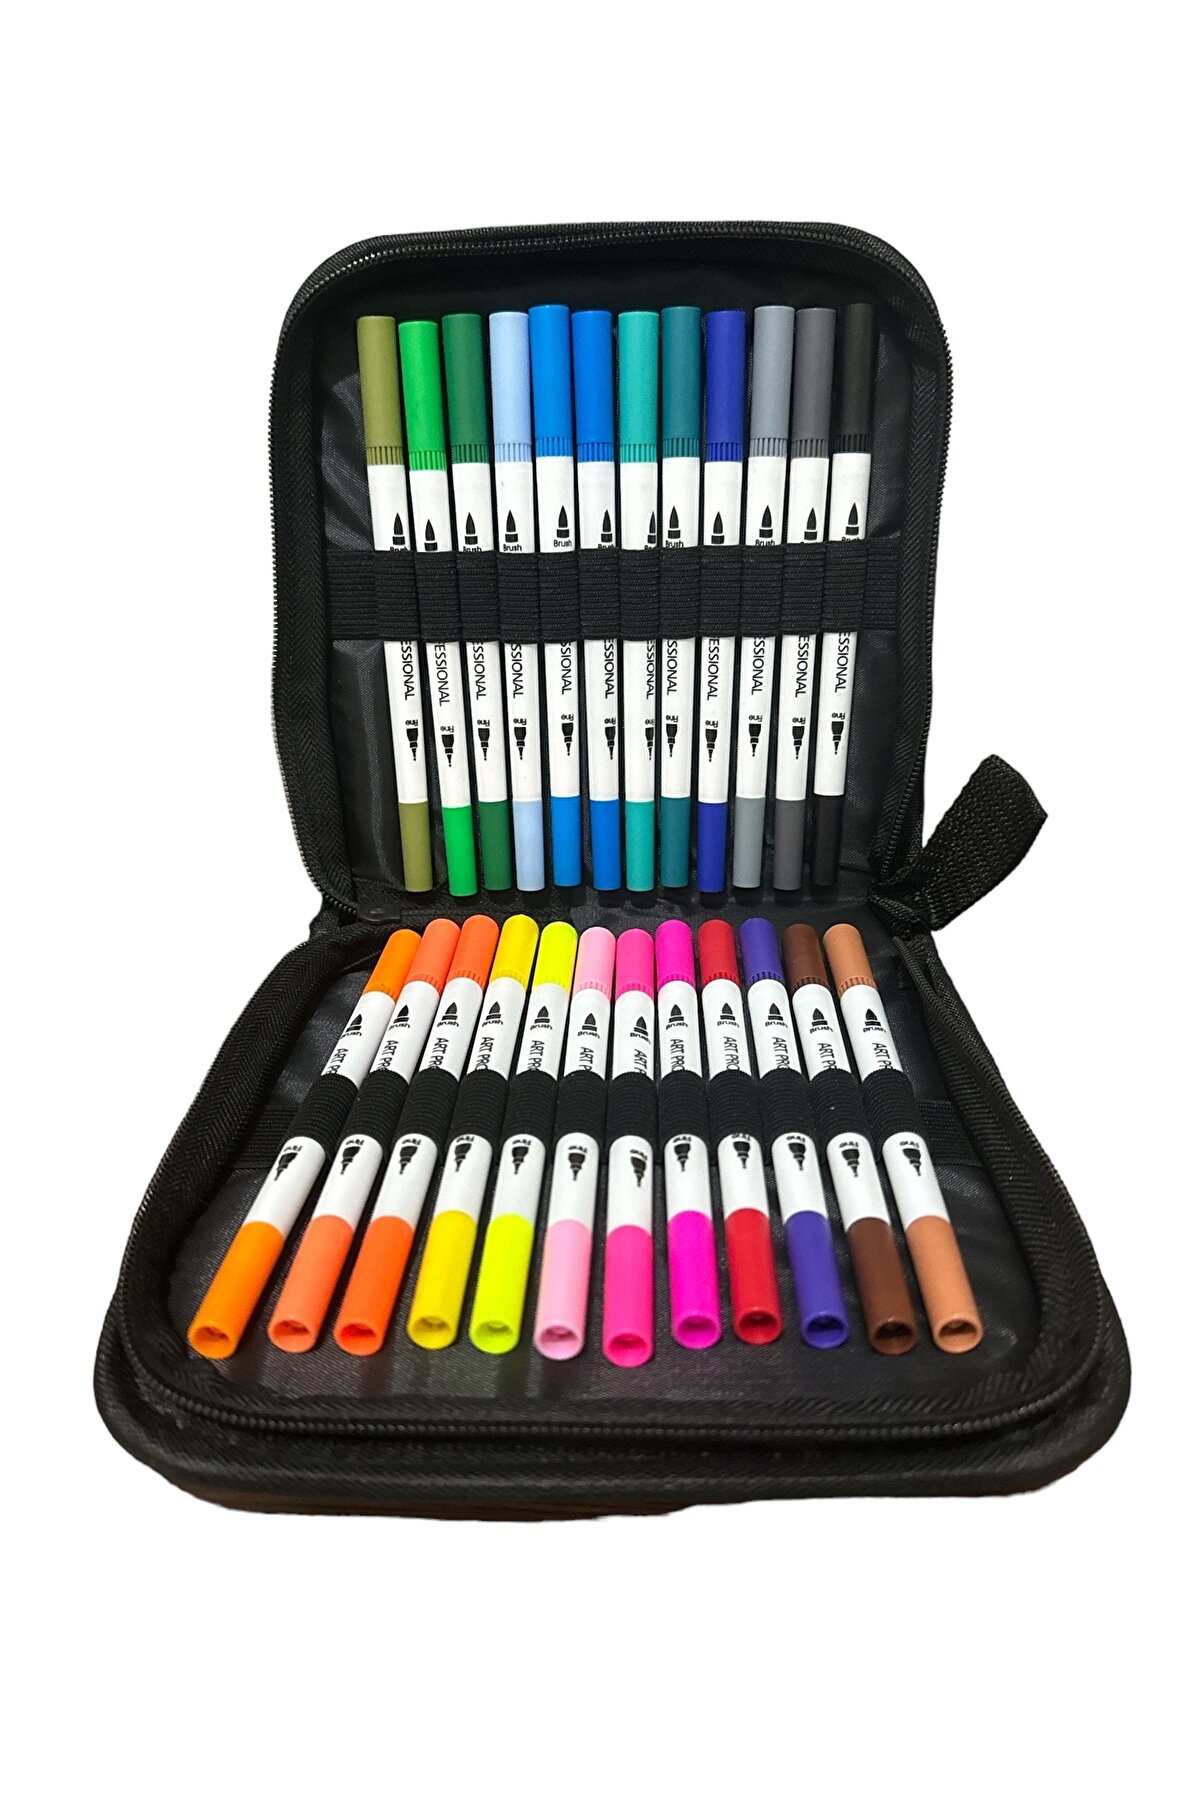 armex 24 Lü Çift Taraflı Brush pen Marker Kalem Seti Art Journal Sanatsal Kalemlik Çanta ile